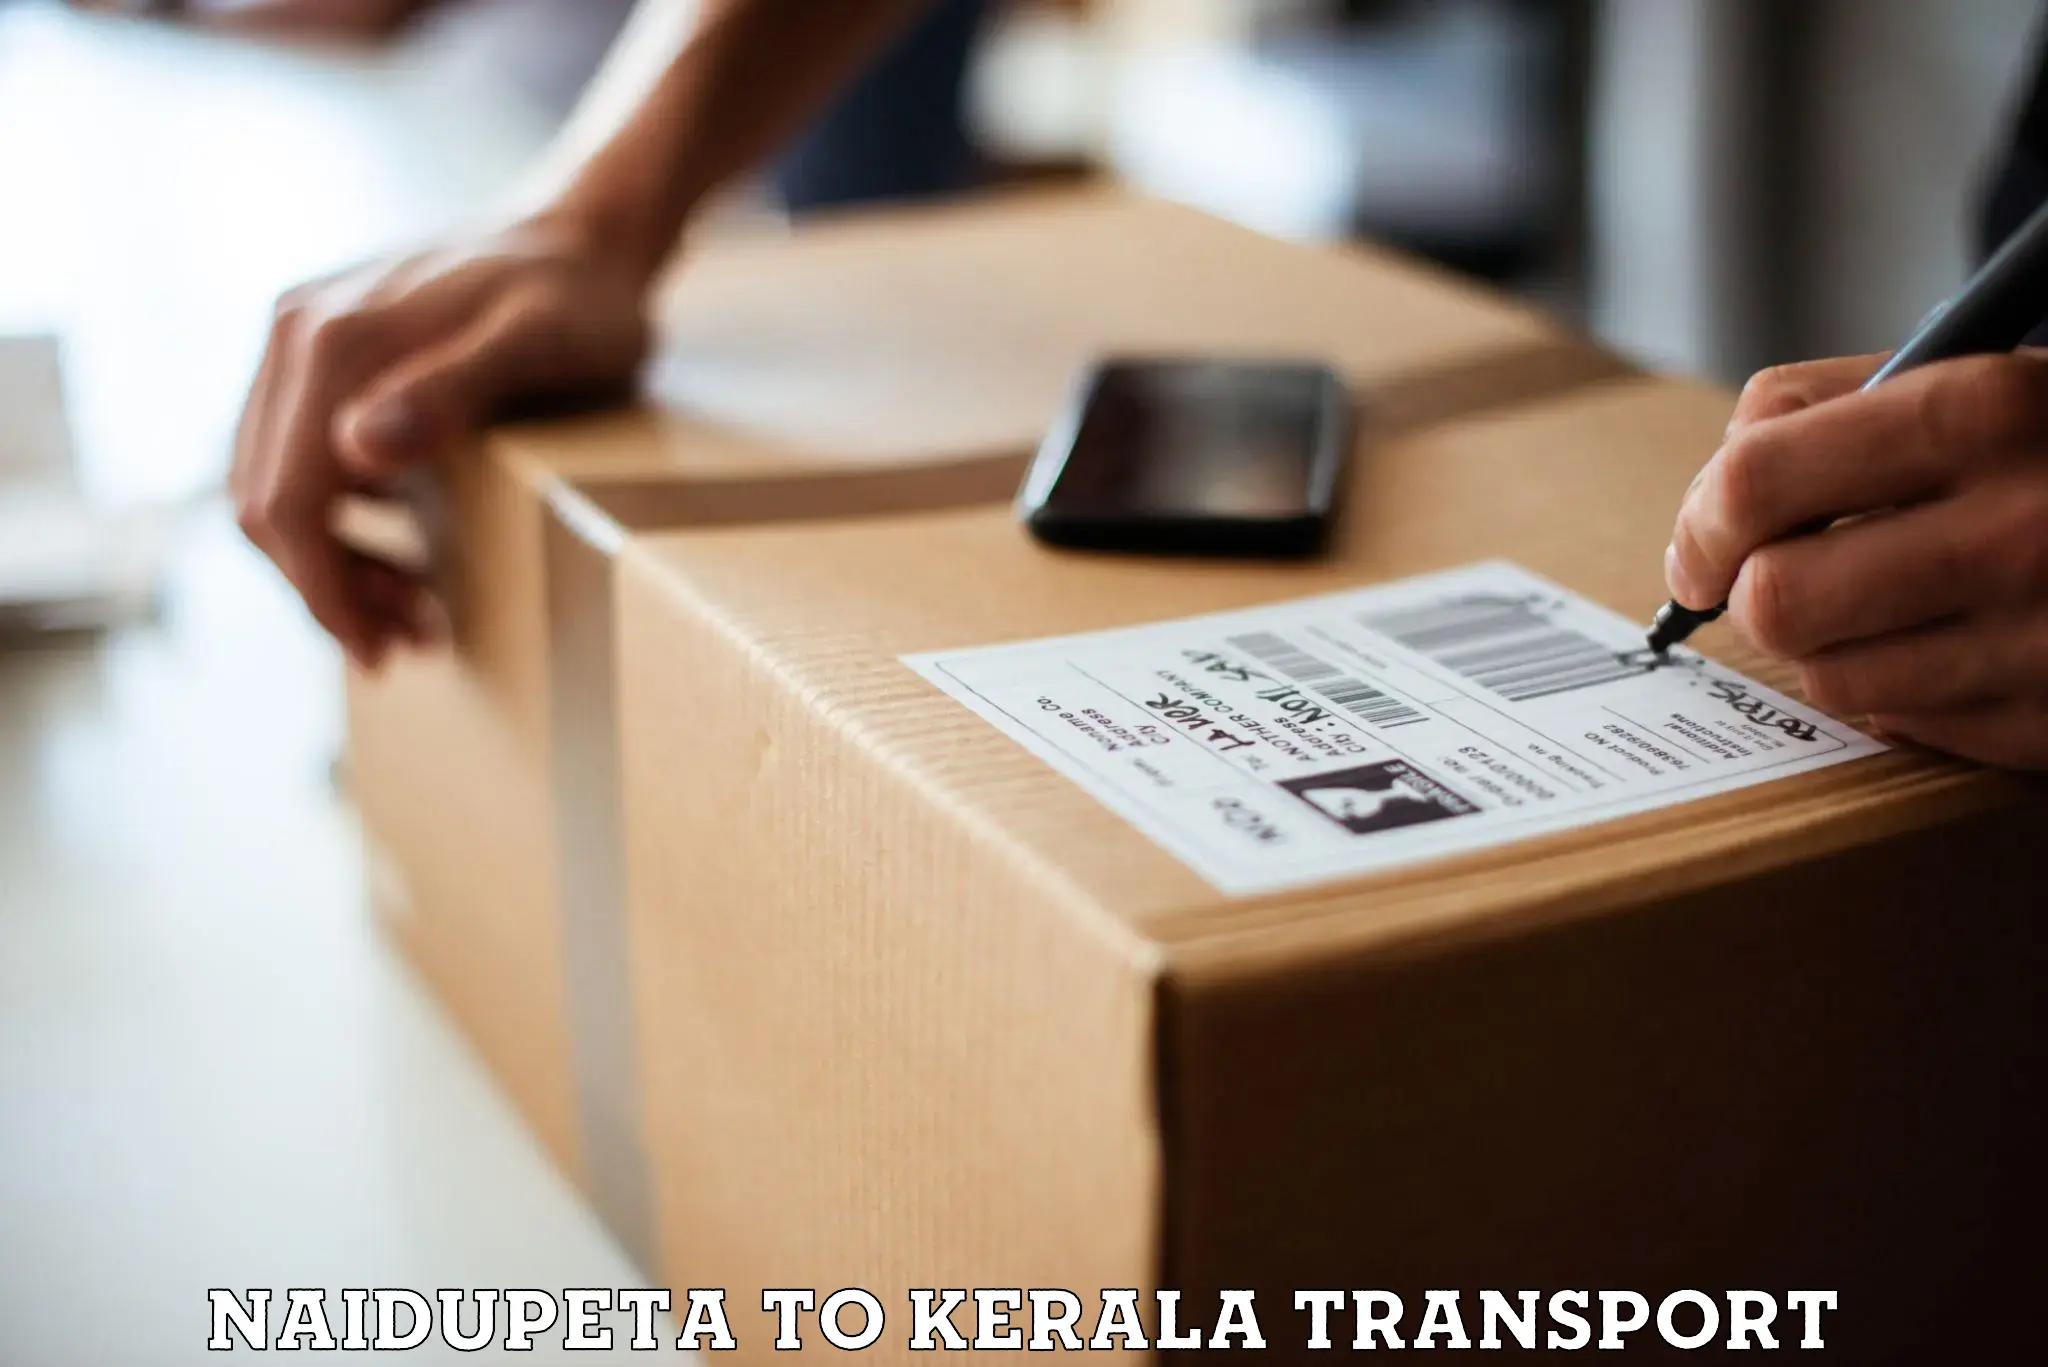 Delivery service Naidupeta to Kerala